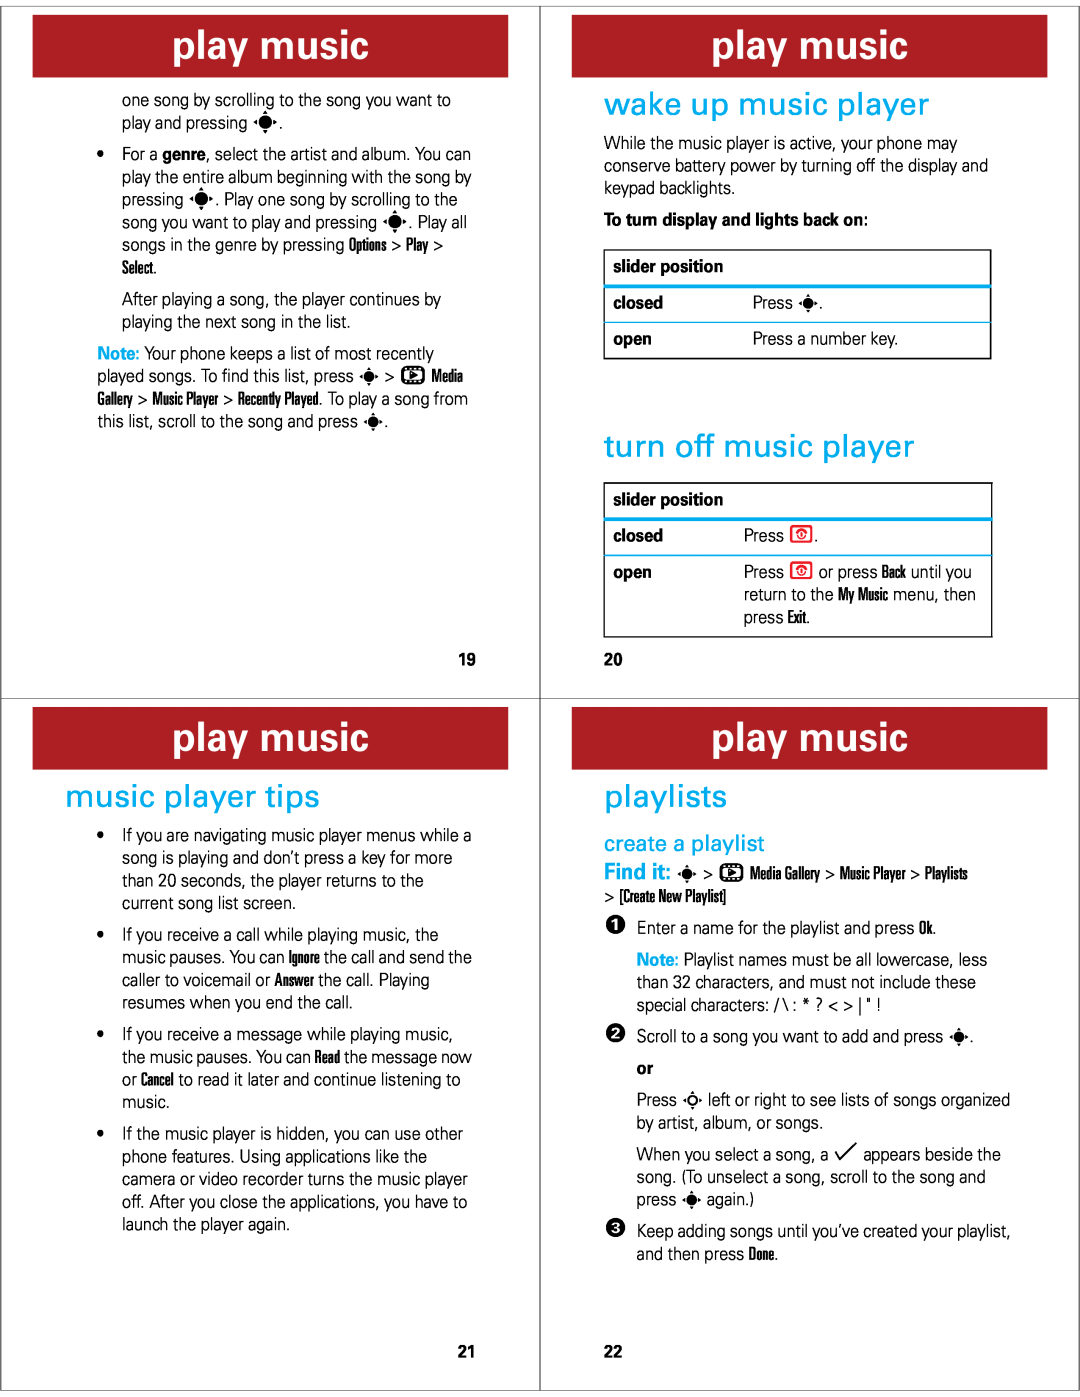 Motorola Z6M wake up music player, turn off music player, music player tips, playlists, create a playlist, play music 